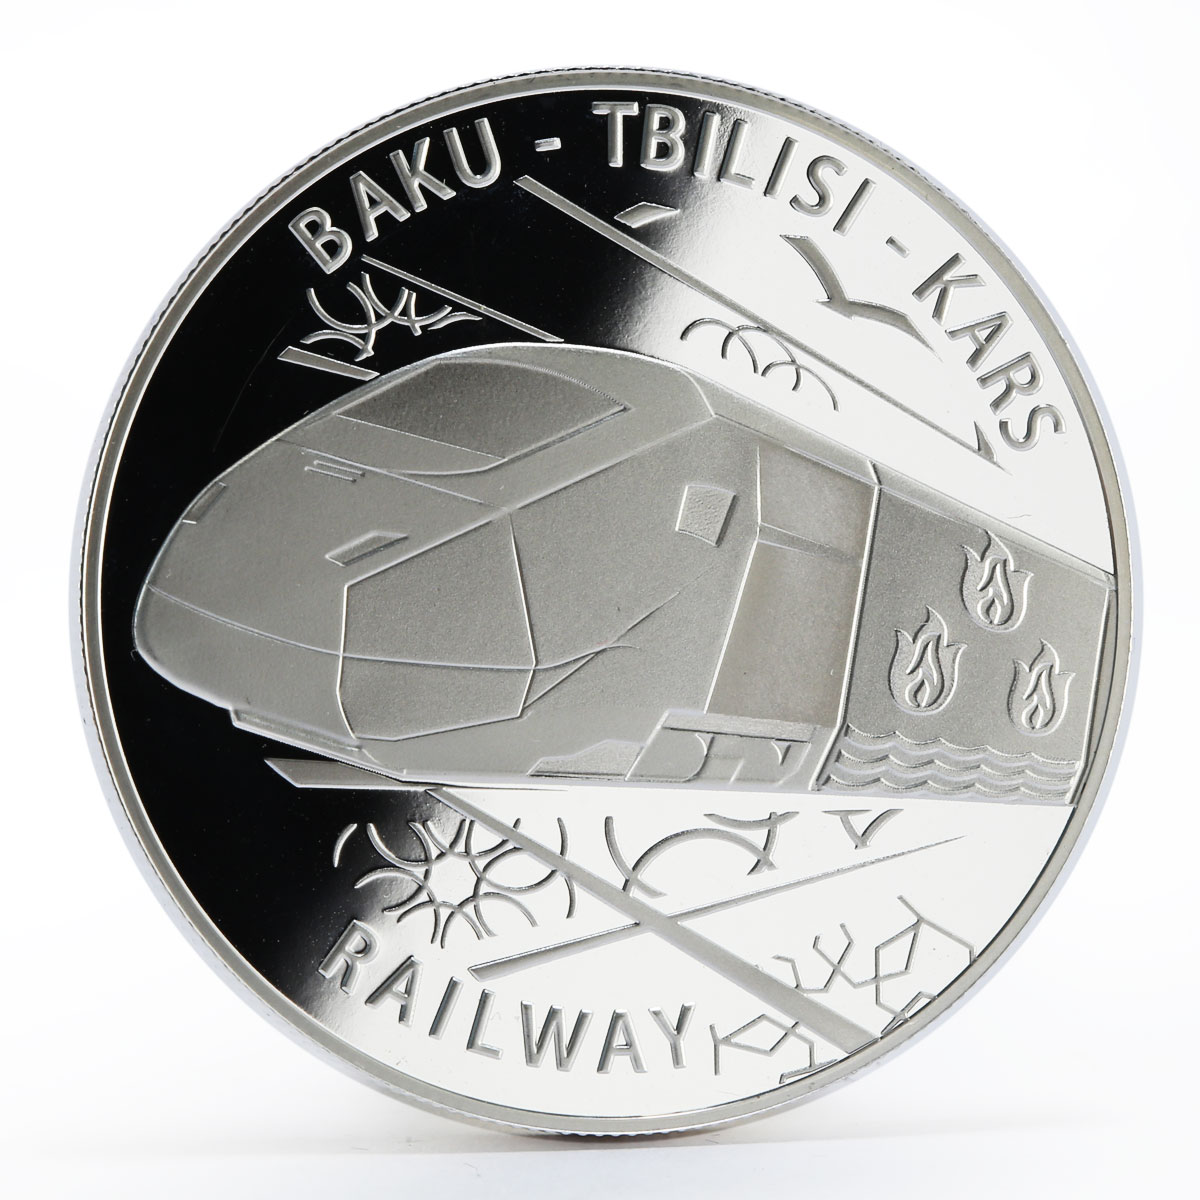 Azerbaijan 5 manat Baku-Tbilisi-Kars Railway proof silver coin 2015